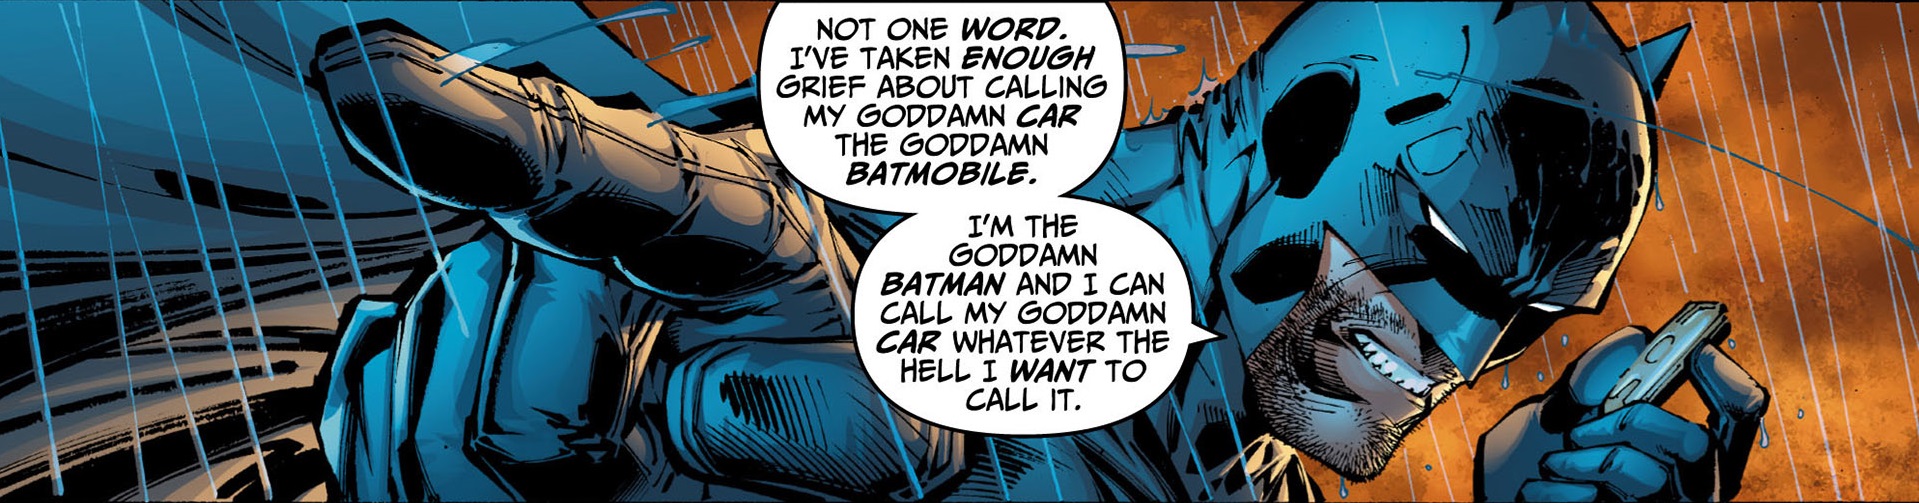 Frank Miller's goddamn Batman | Gotham Calling